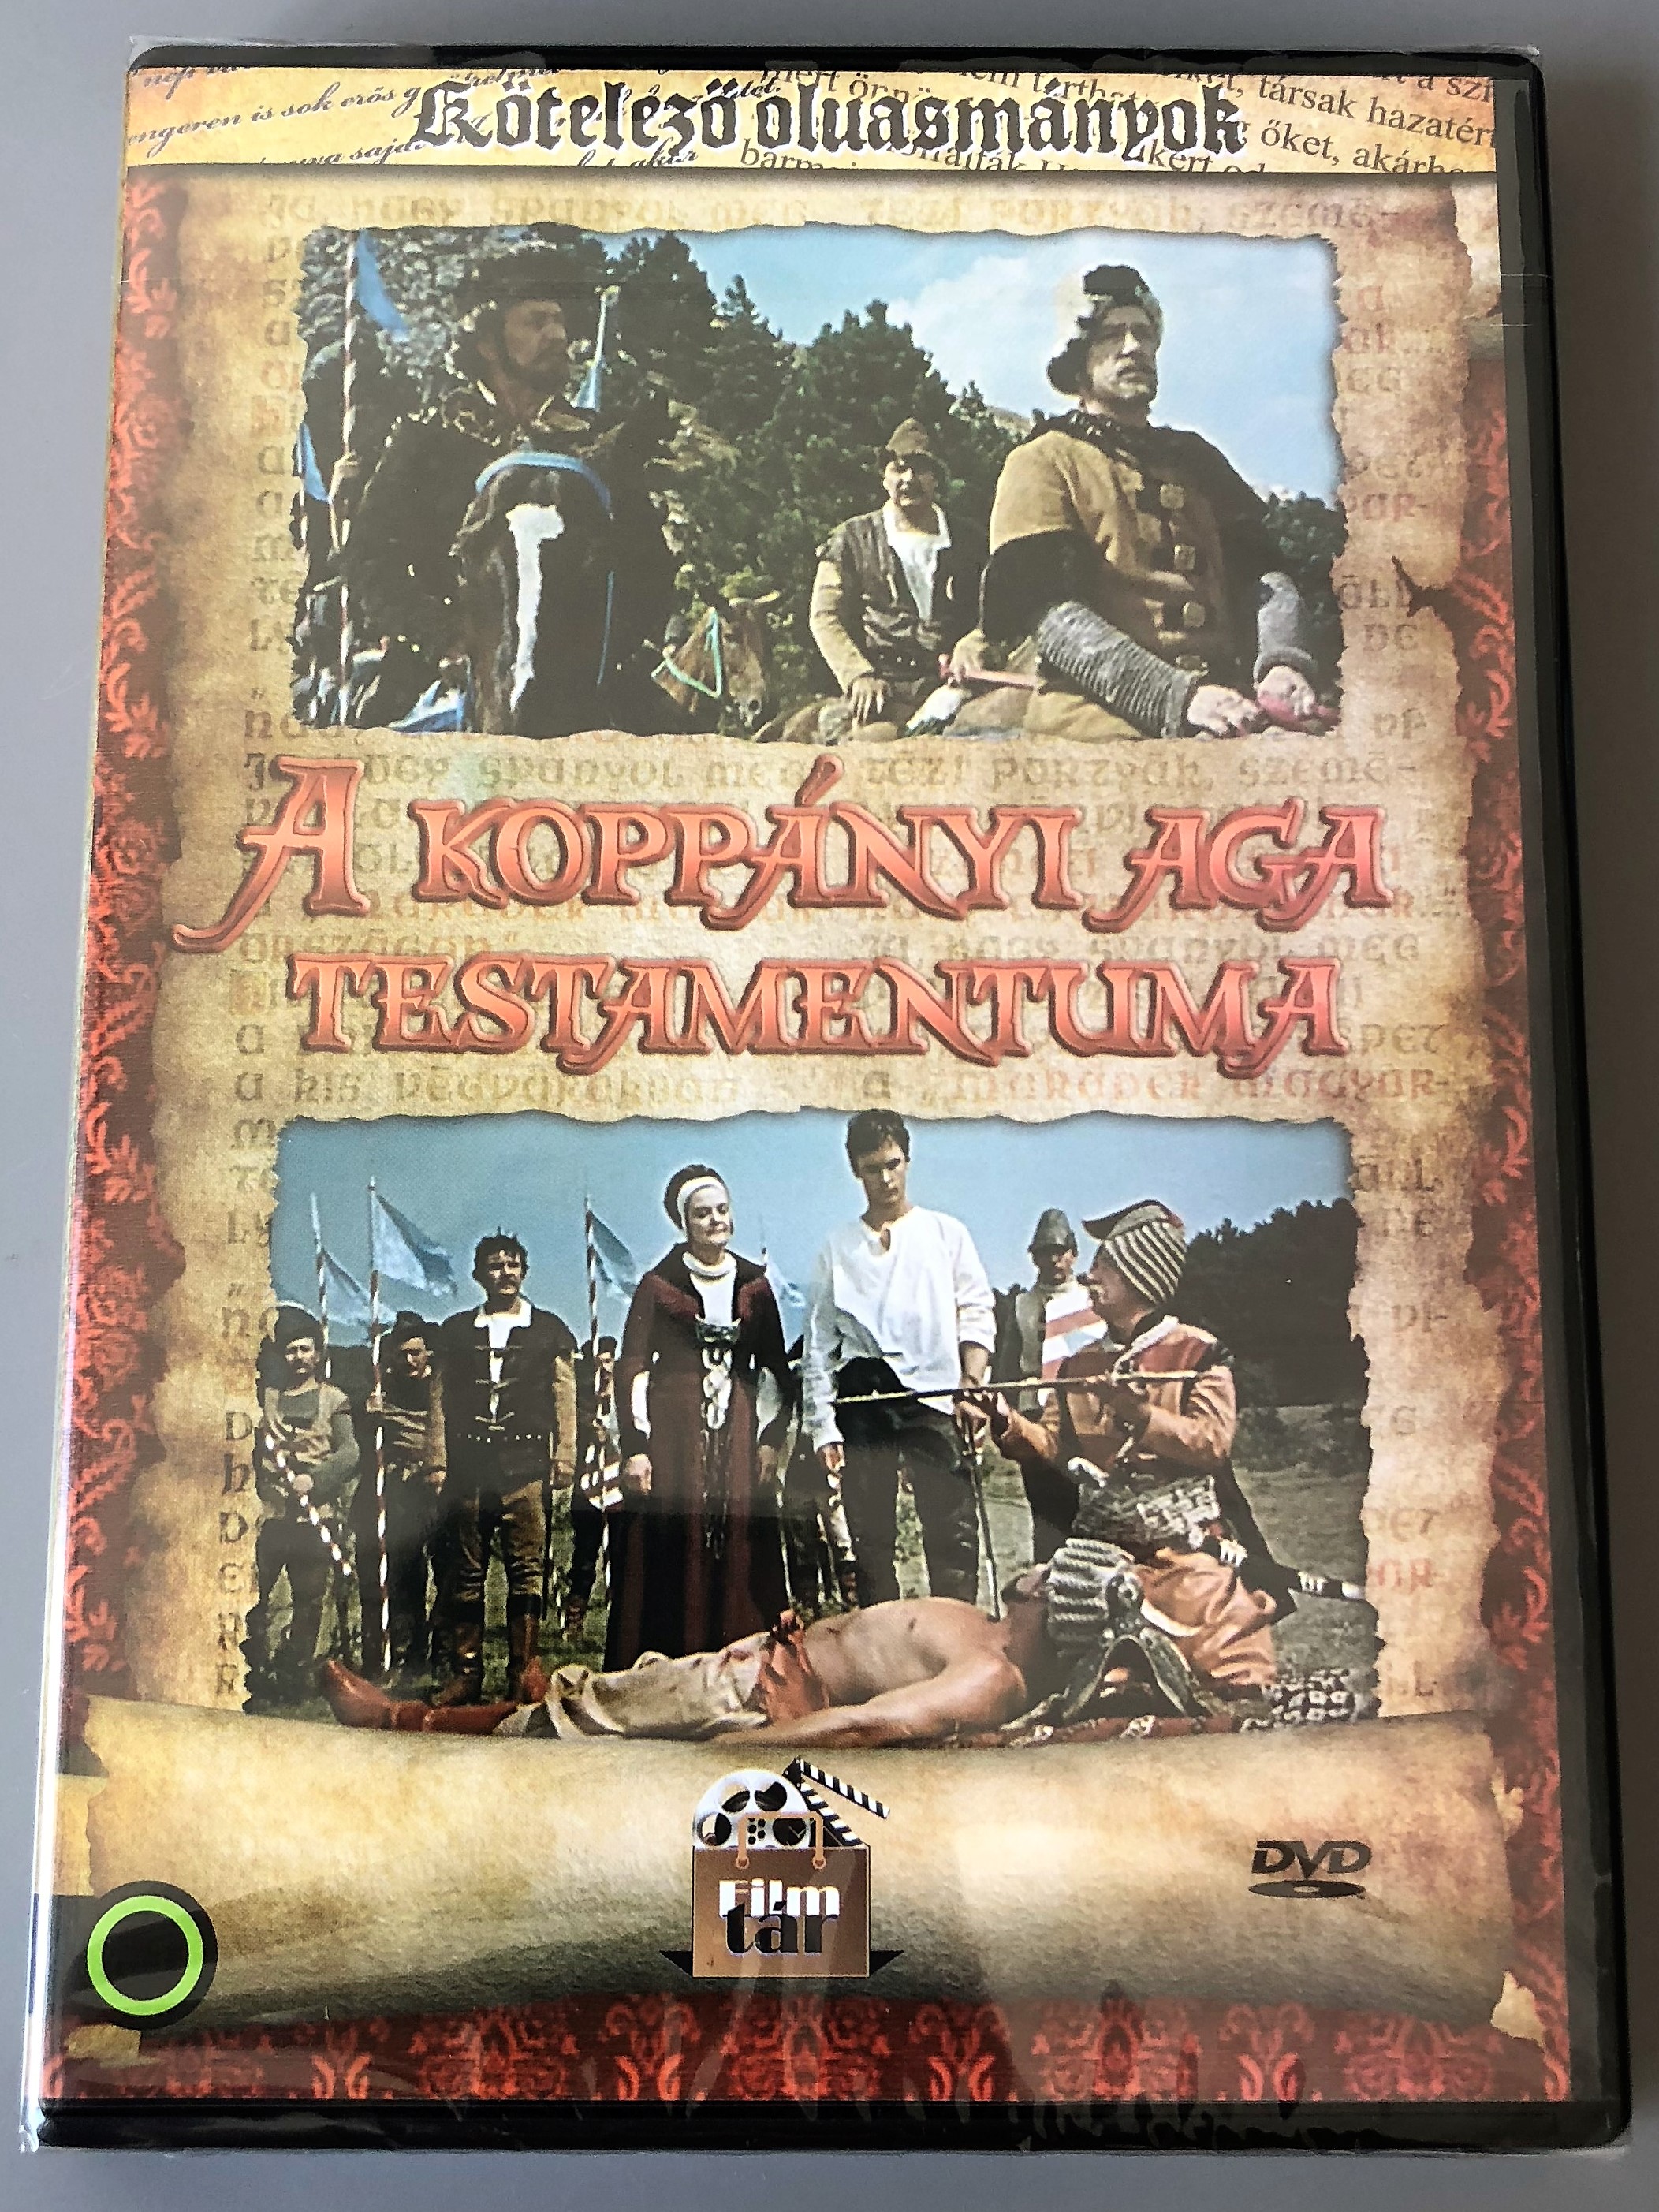 a-kopp-nyi-aga-testamentuma-dvd-1968-the-testament-of-aga-koppanyi-directed-by-va-zsurzs-starring-ferenc-bessenyei-kl-ri-tolnay-p-ter-benk-1-.jpg